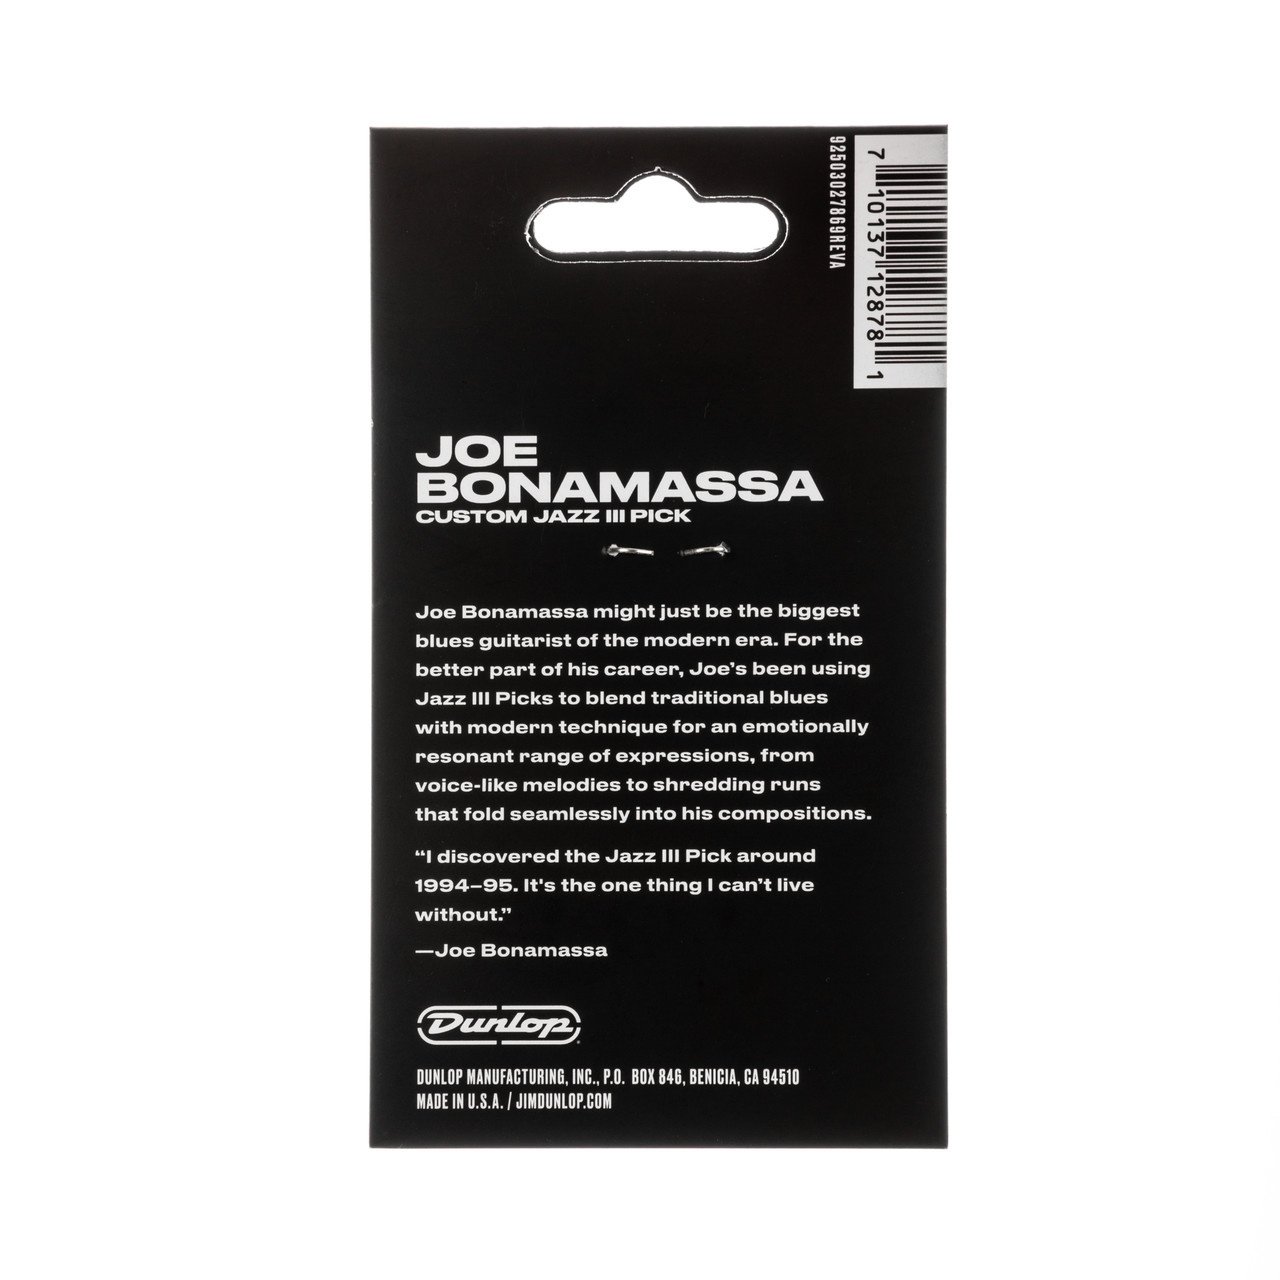 Dunlop Joe Bonamassa 6-Pick Variety Pack, Custom Jazz III Picks